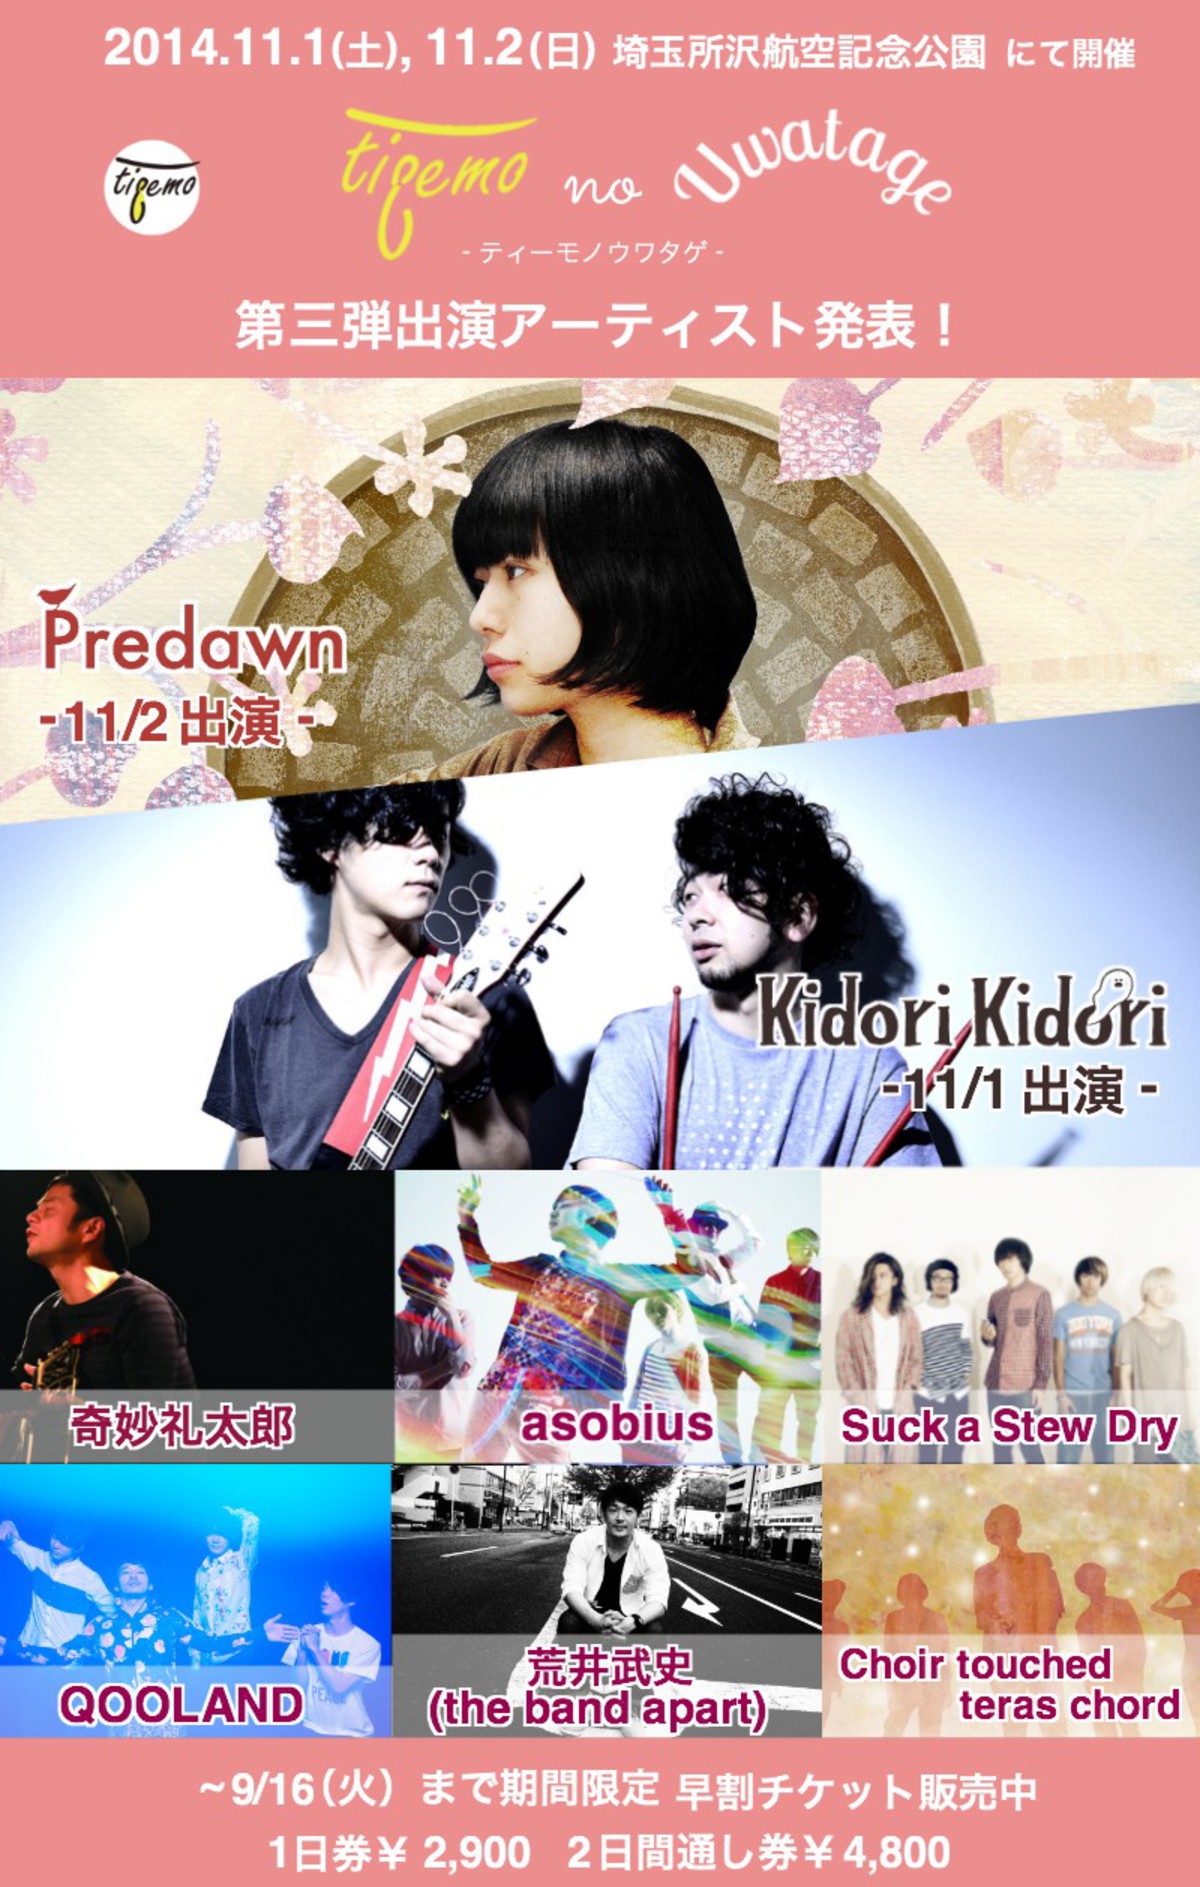 Kidori Kidori Predawnの2組が 11月に埼玉 所沢航空記念公園にて開催される新たな音楽フェス Tieemo No Uwatage に出演決定